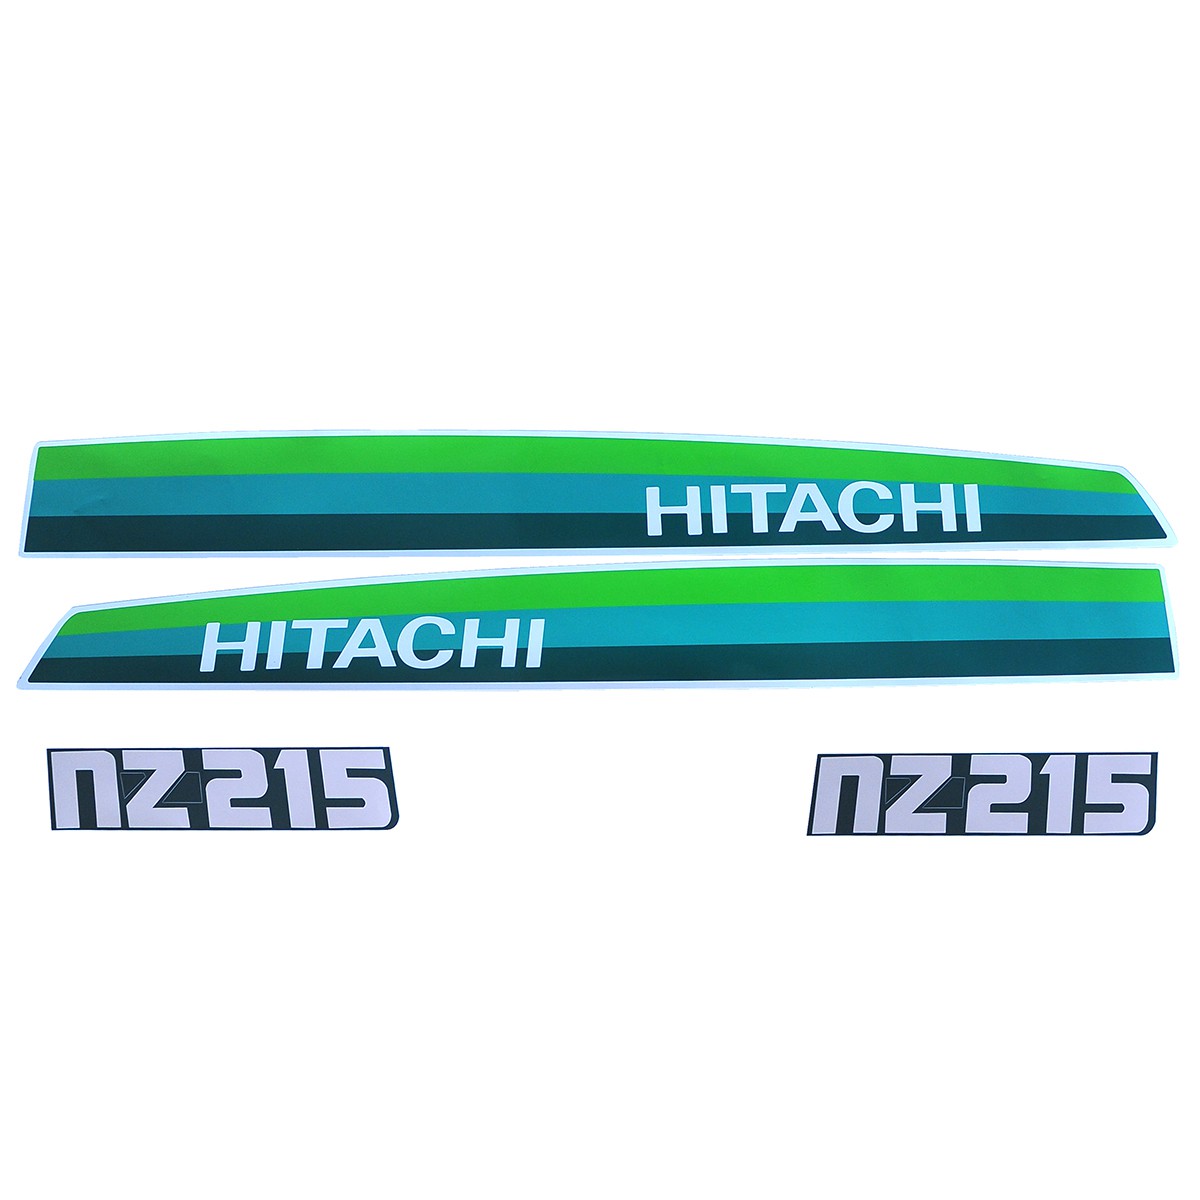 Hitachi NZ215 stickers